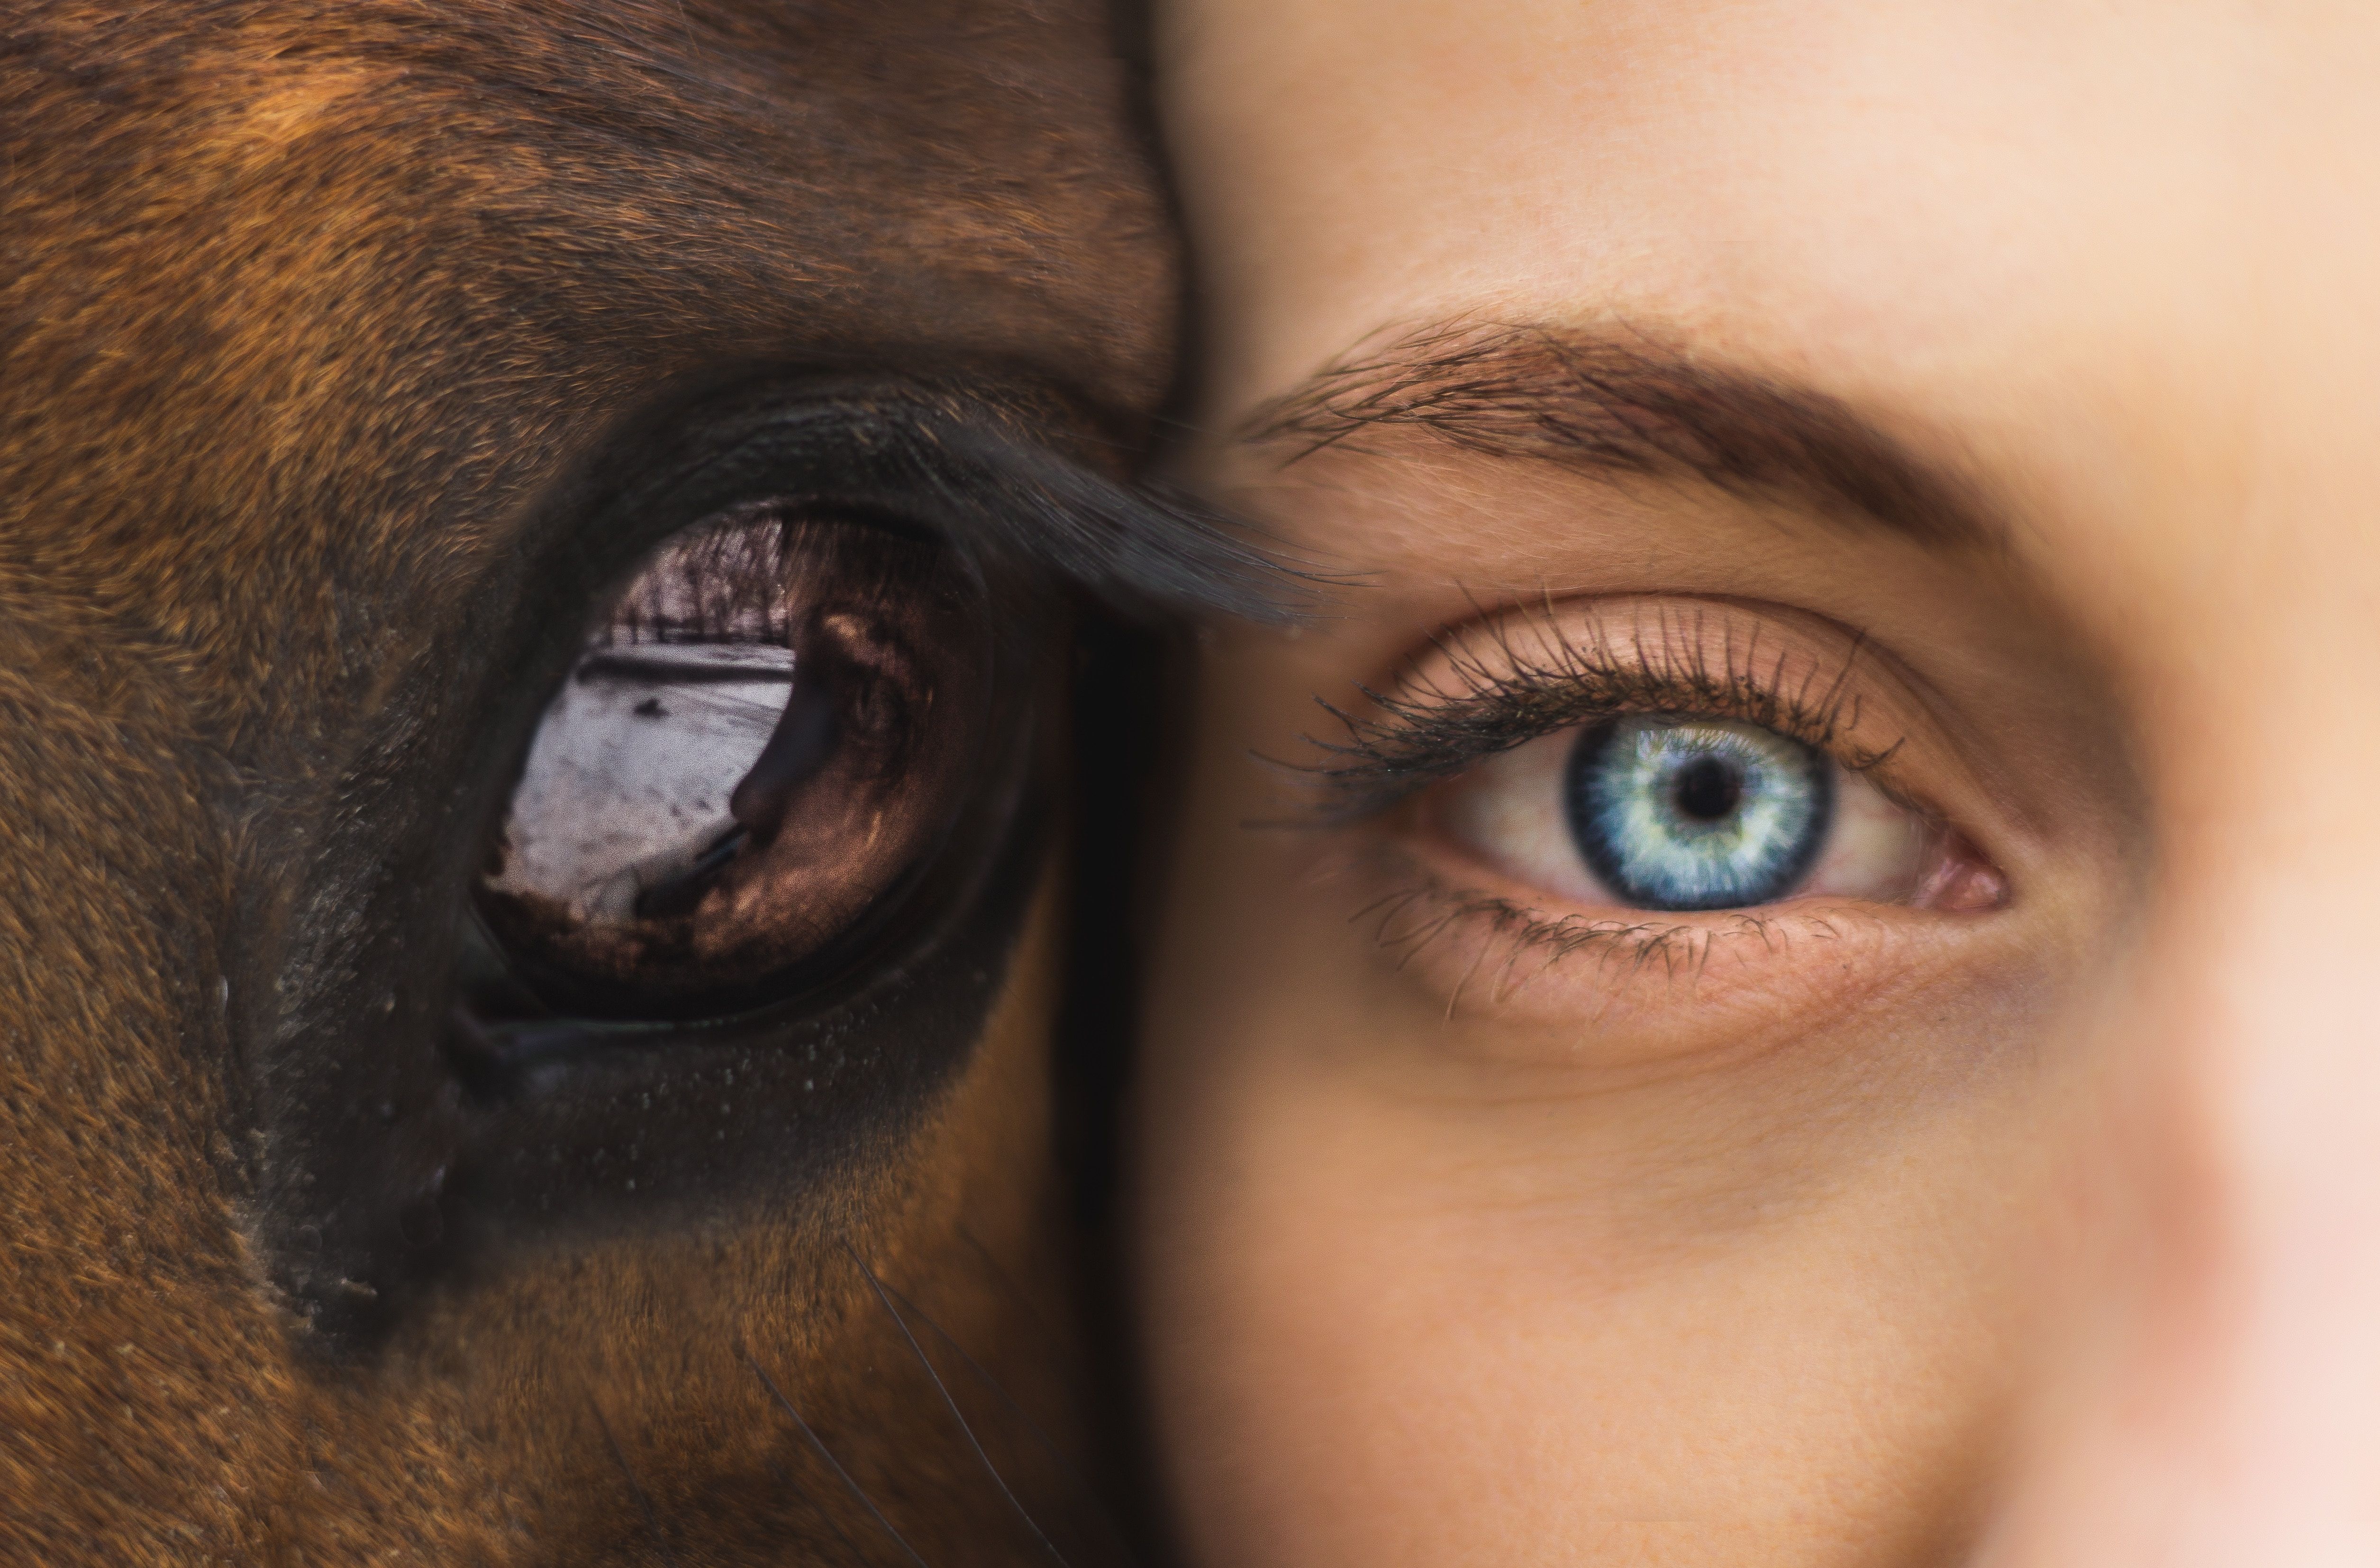 5022x3308 #eyes, #texture, #farm, #blue eye, #pet, #eye, #eyelash, # eyelashes, #reflection, #skin, #wildlife, #animal, #female, #horse, #fur, #love, #close up, #eyebrow, #face, #woman, #PNG image. Mocah.org HD Wallpaper